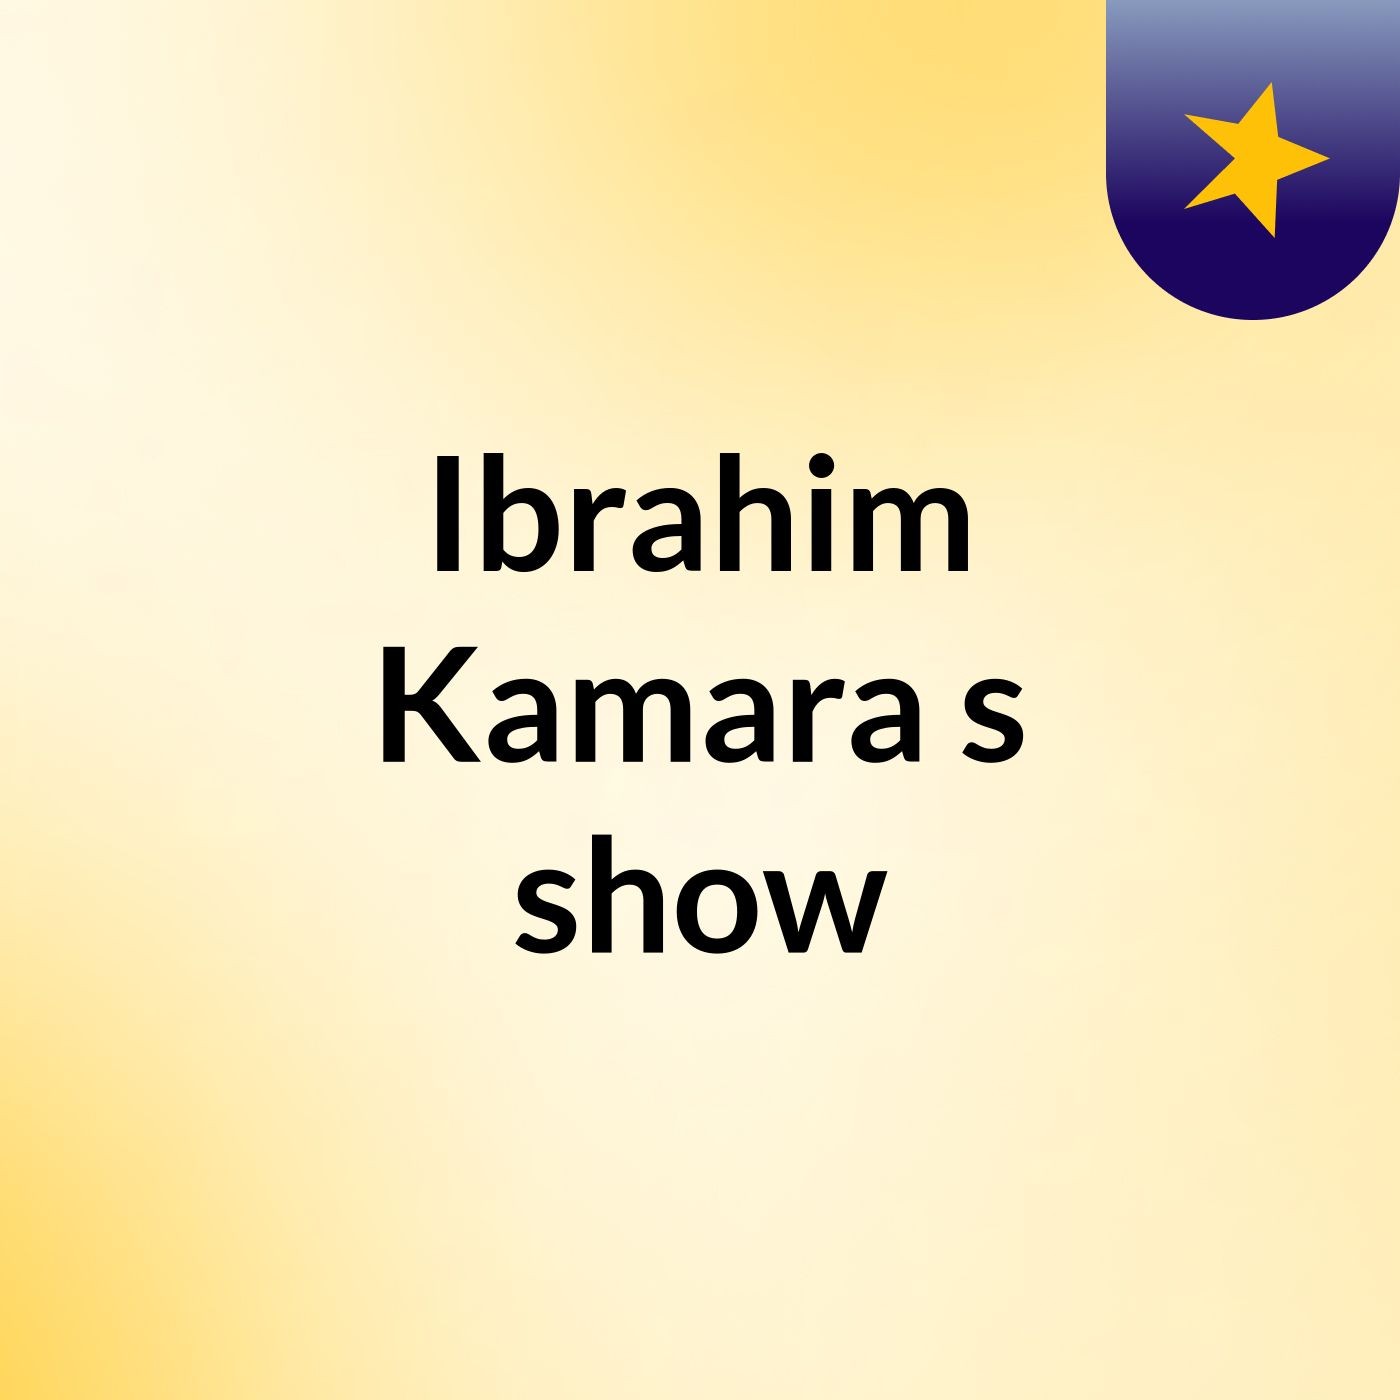 Ibrahim Kamara's show